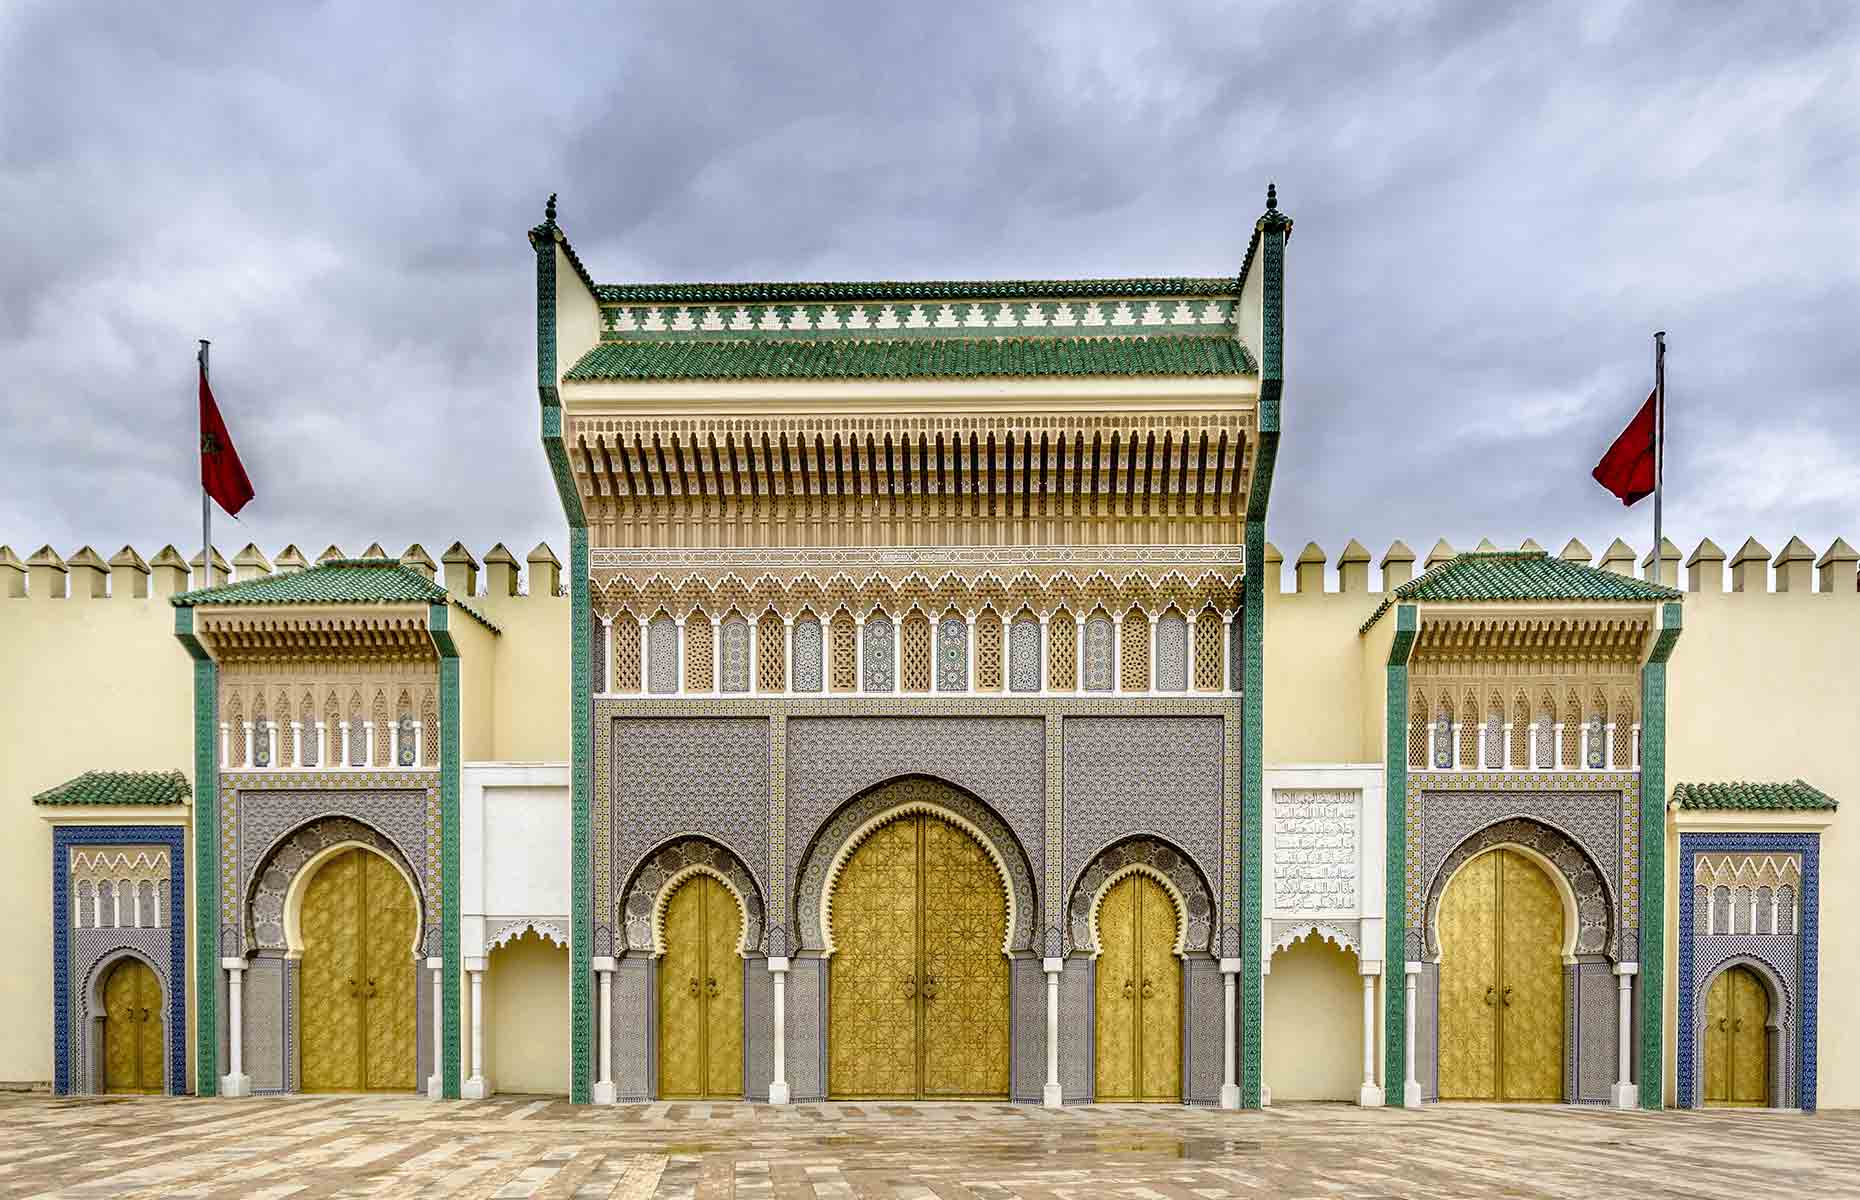 Palais Royal - Séjour Maroc, Voyage Fès ©Luisa Puccini